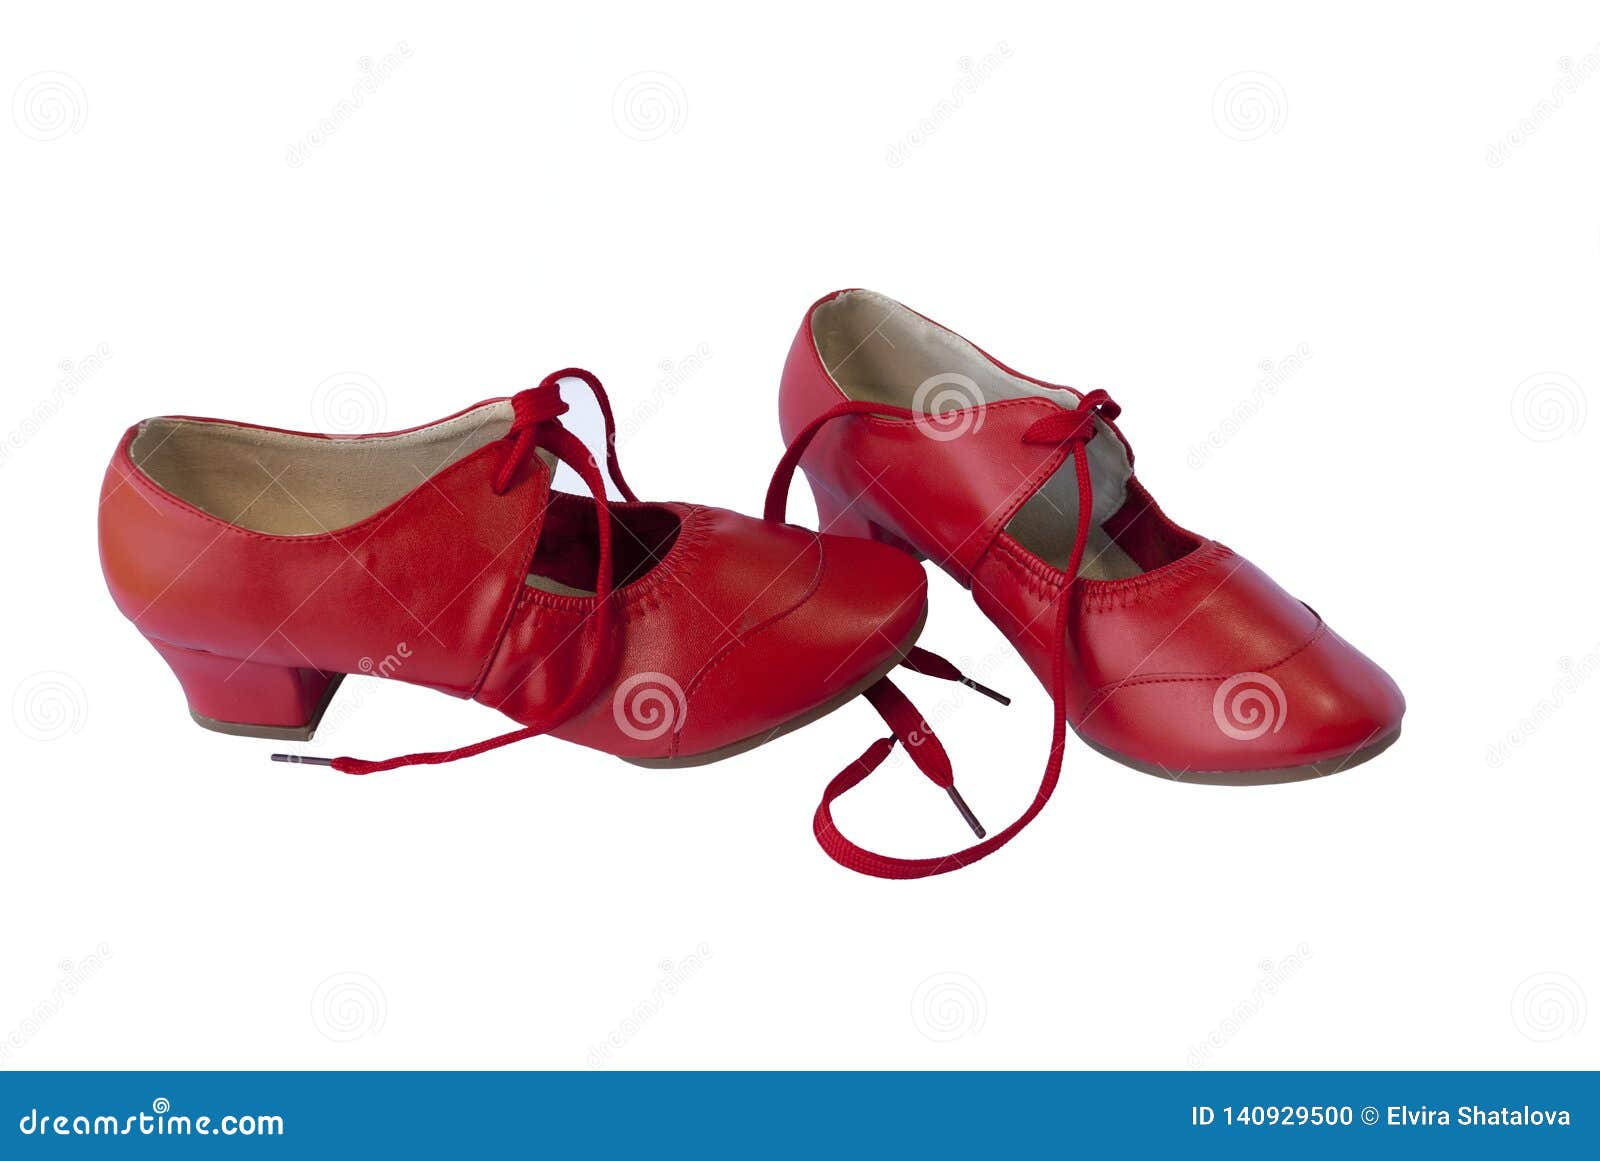 red ballroom dance shoes